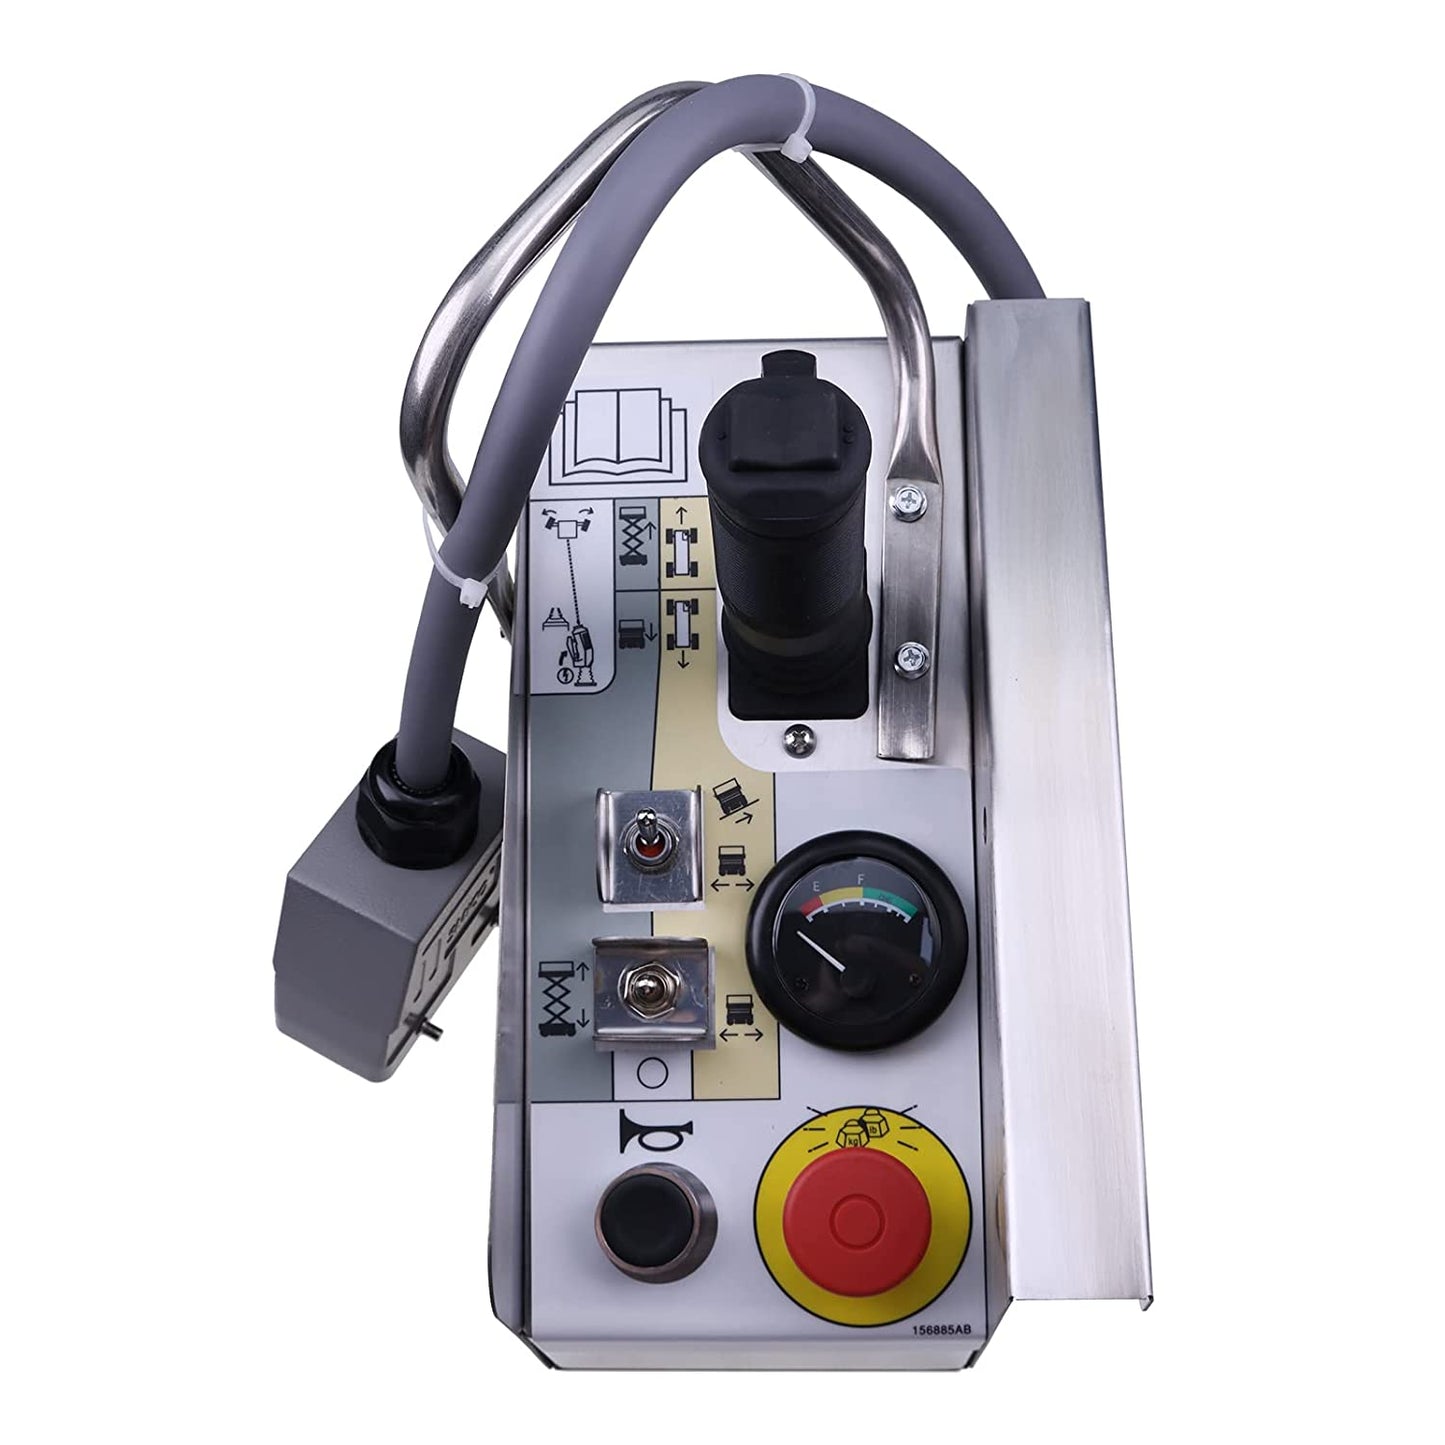 163167 163168 Control Box Compatible with SkyJack Scissor Lift SJIII 3215 SJII 3219 SJIII 3220